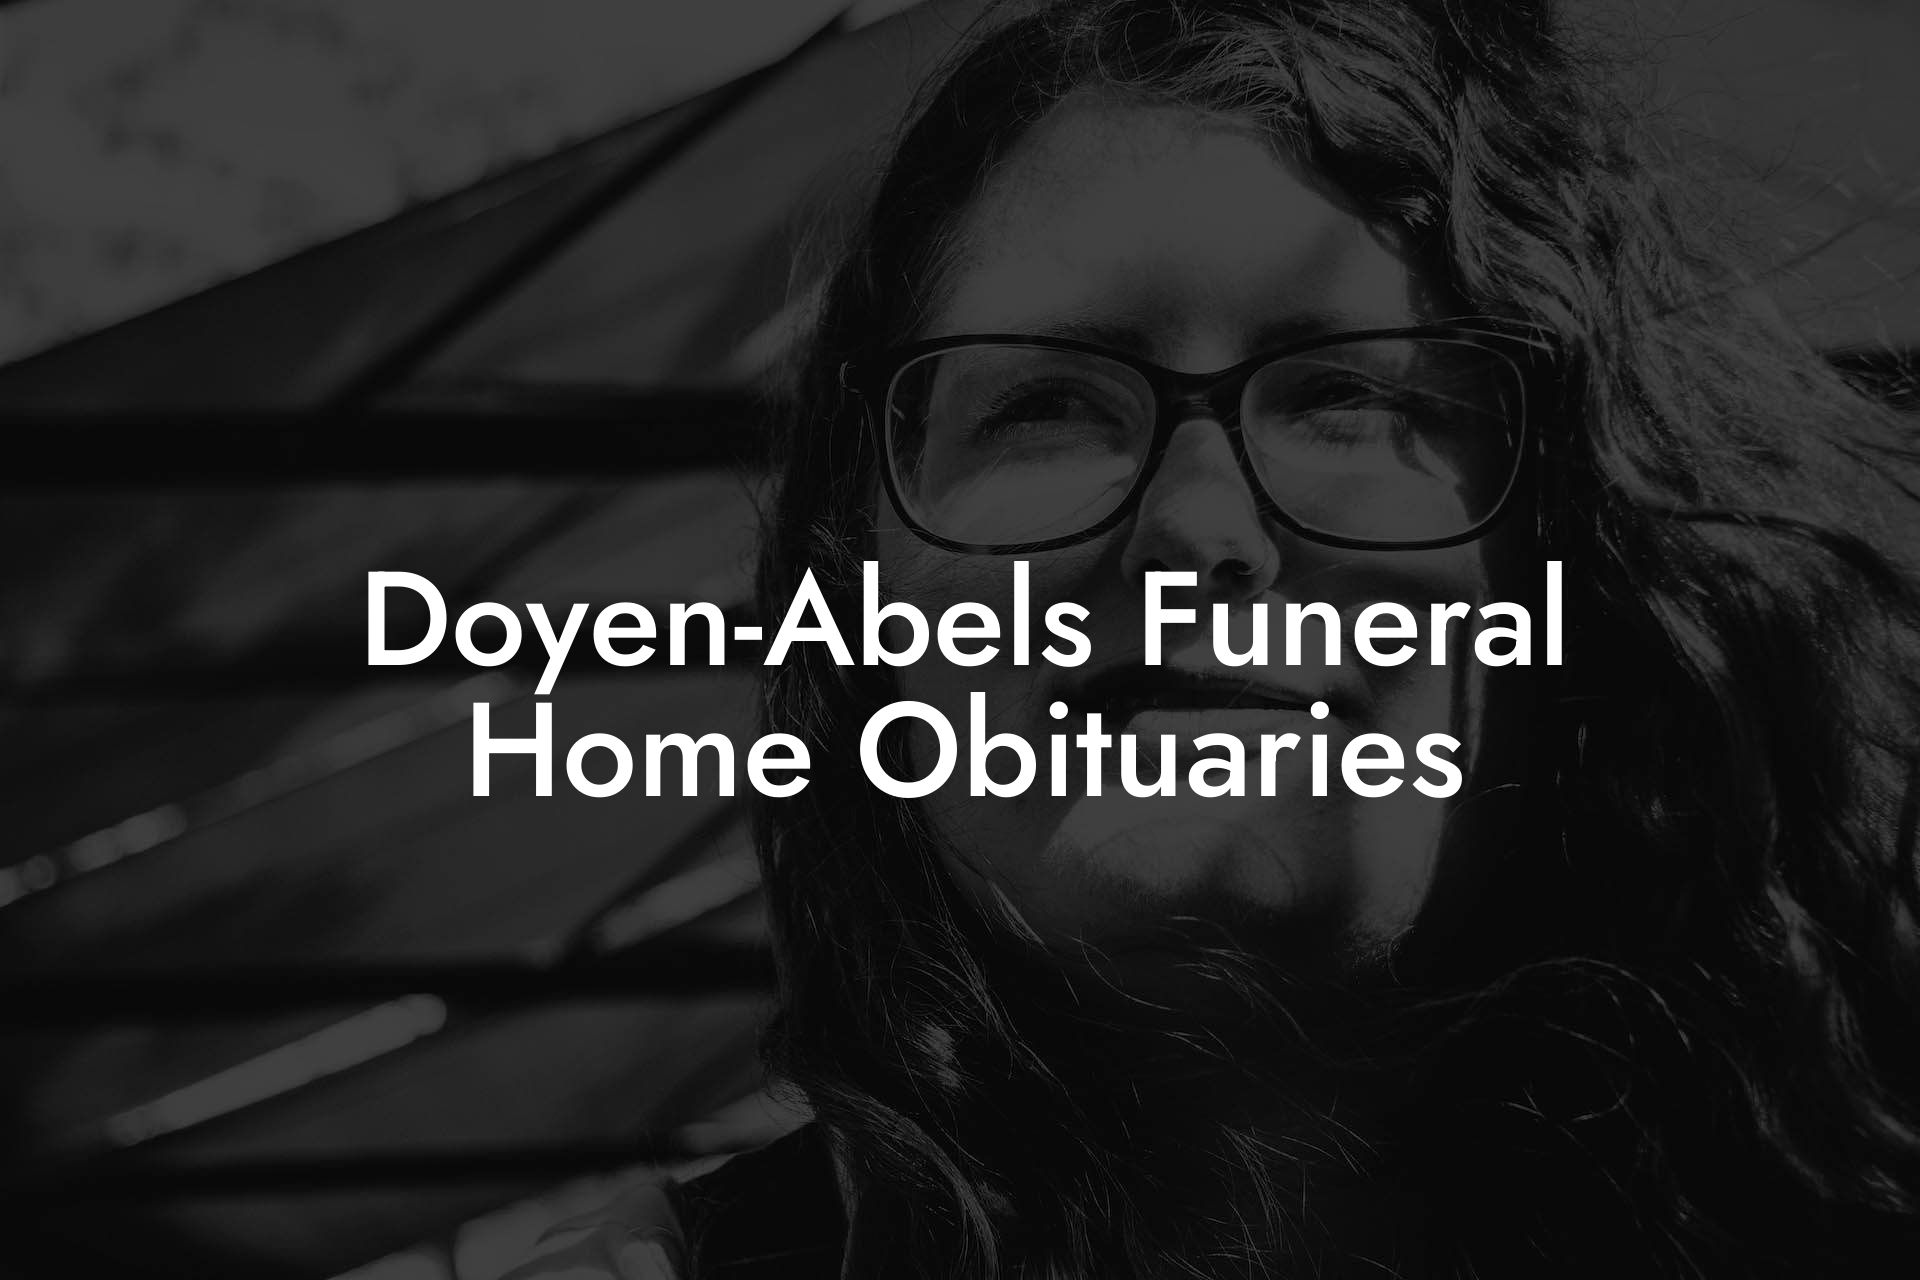 Doyen-Abels Funeral Home Obituaries